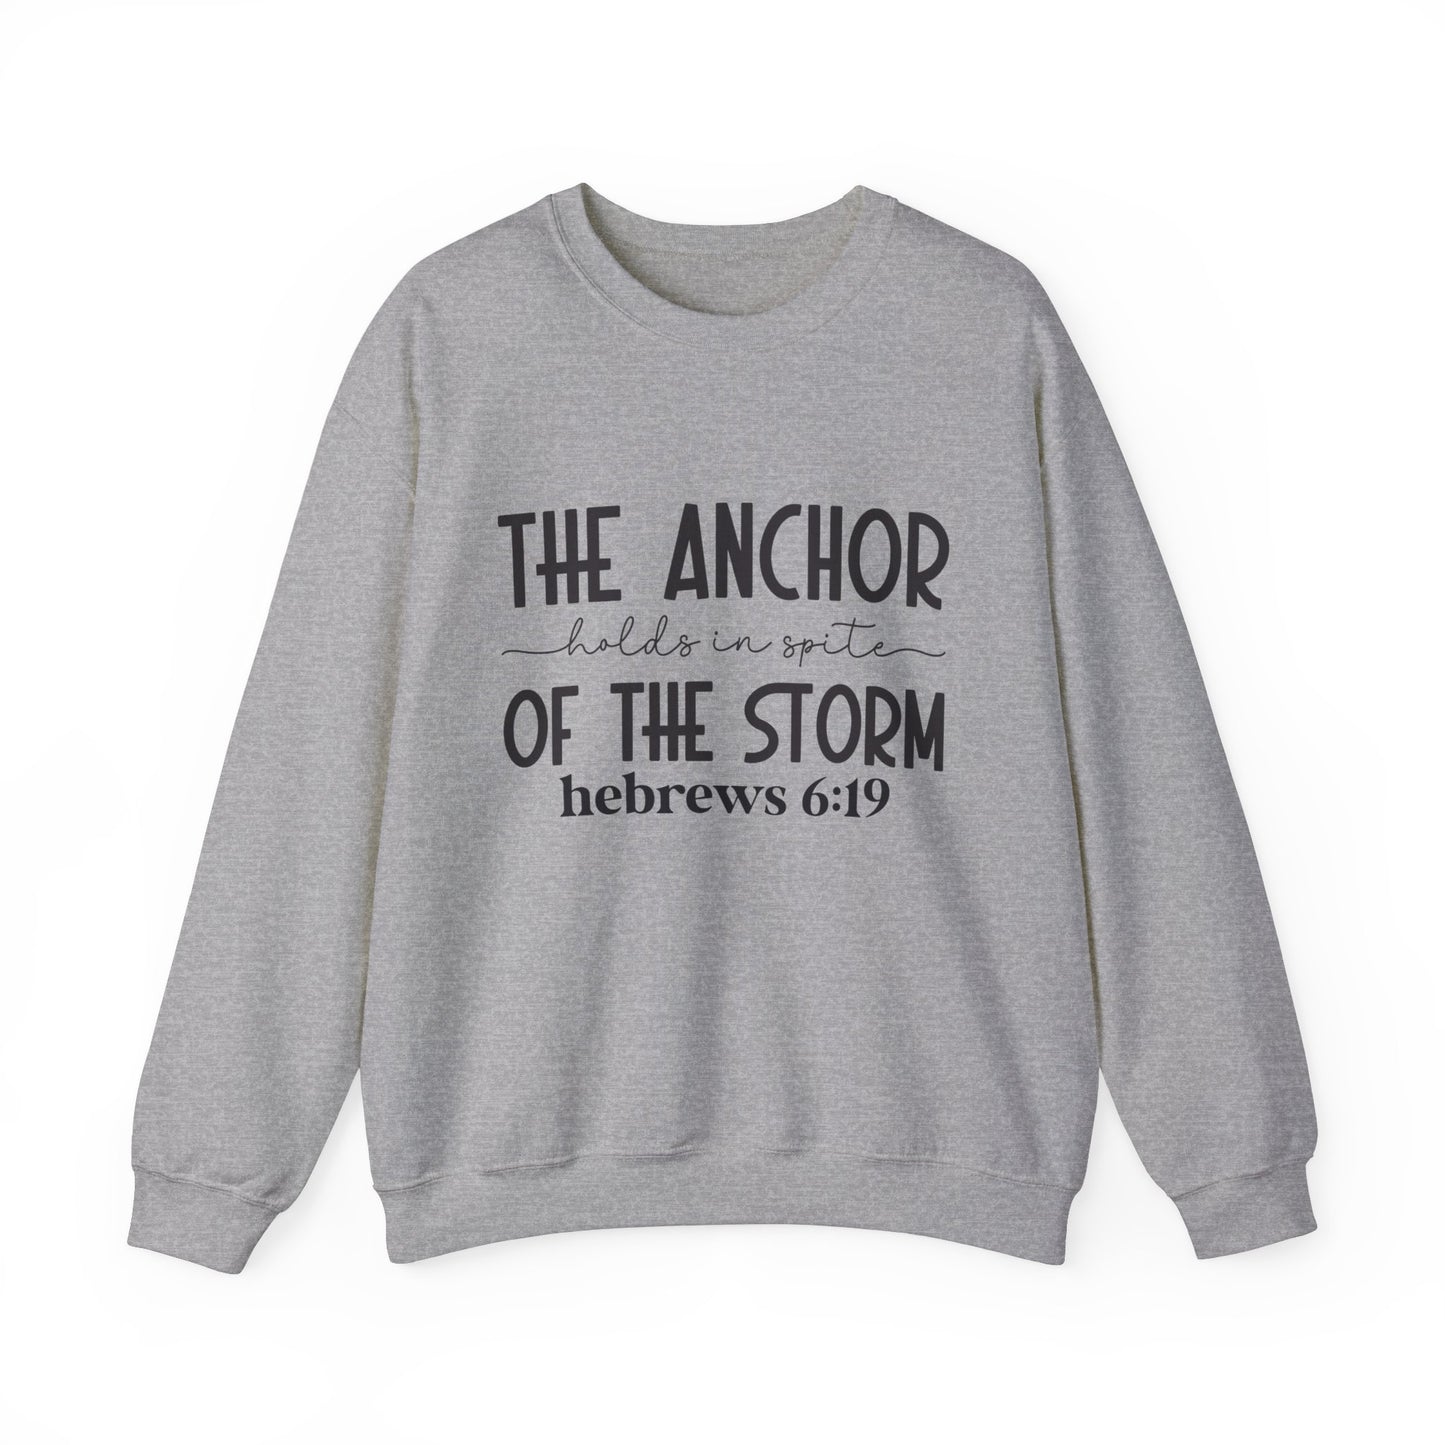 The Anchor Holds Women's Easter Bible Verse Sweatshirt